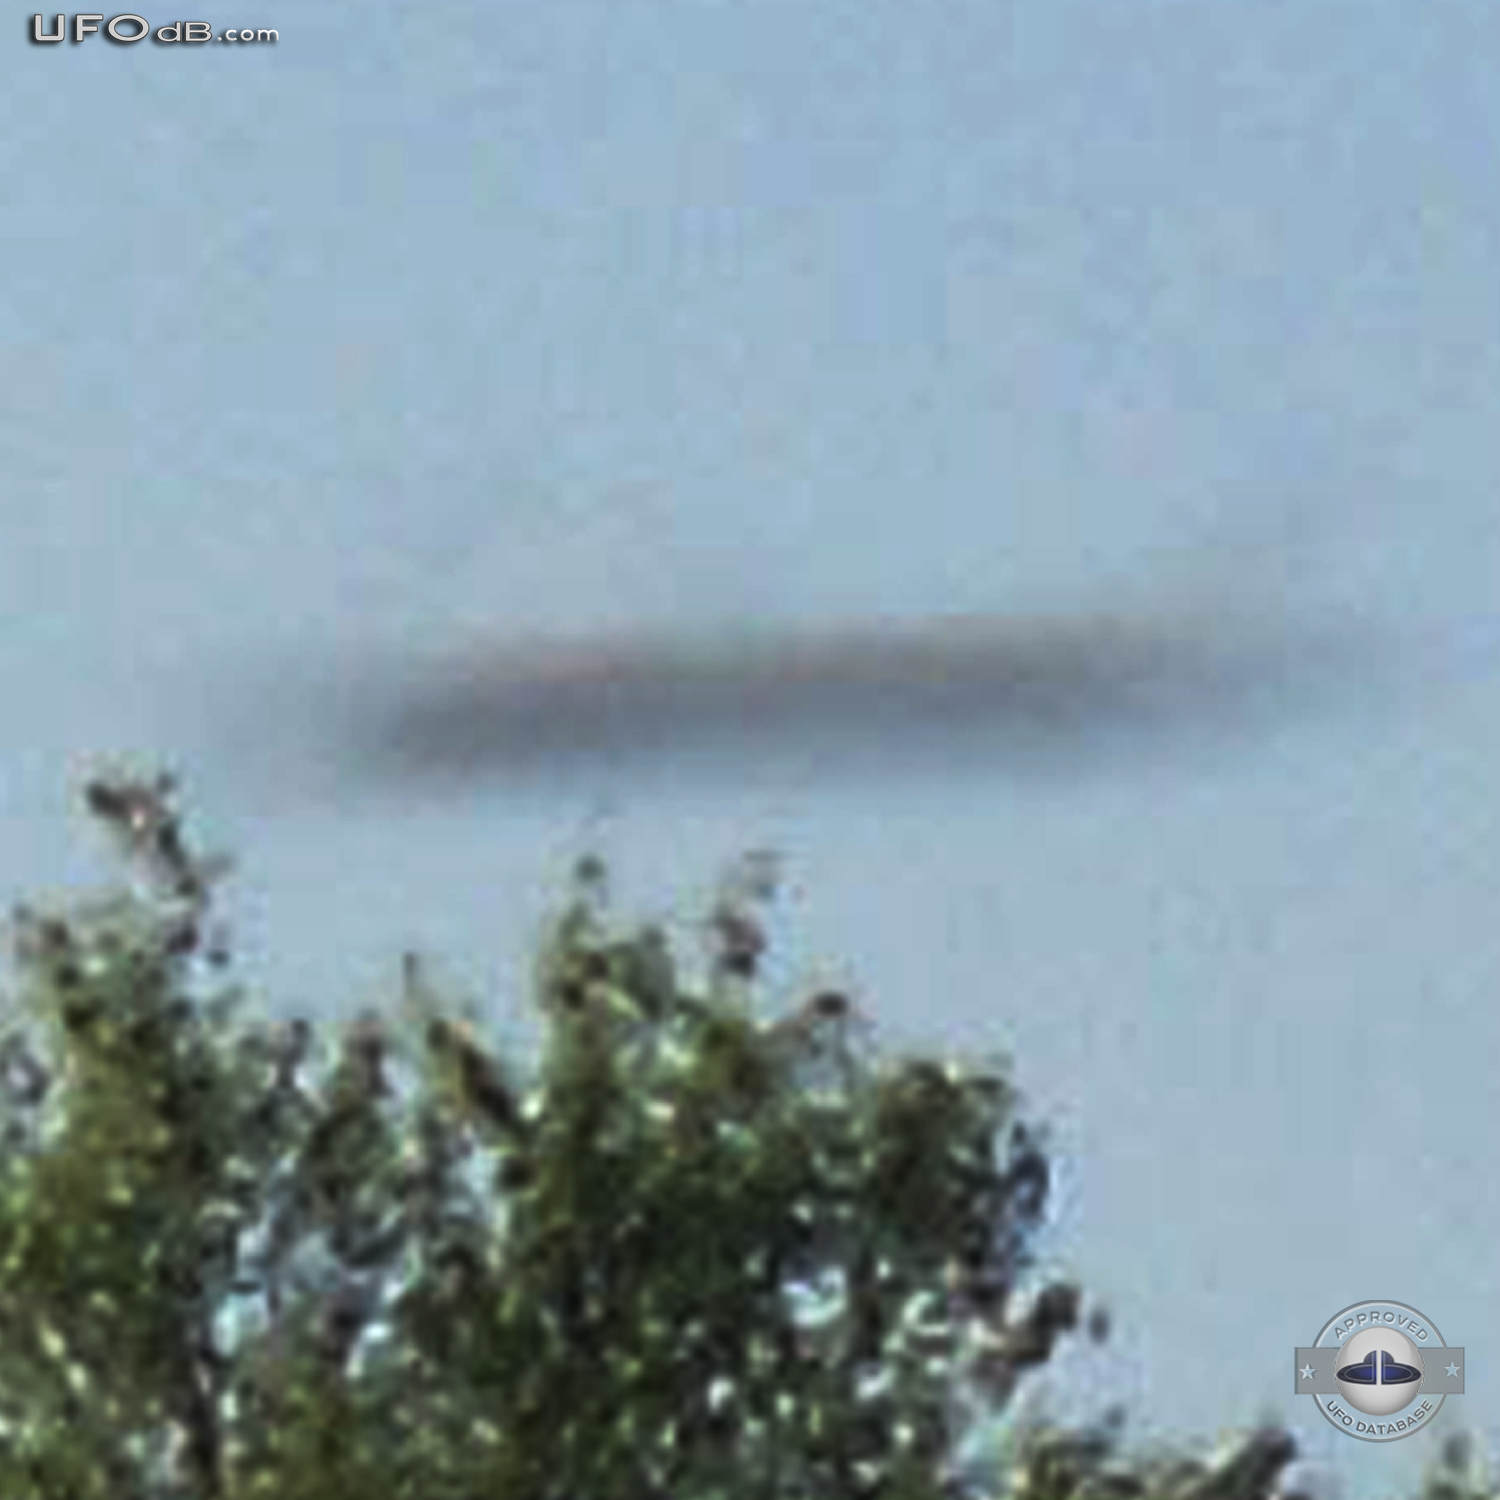 Bradley Ponds Fisherman UFO picture | Lincolnshire UK | April 23 2011 UFO Picture #301-5